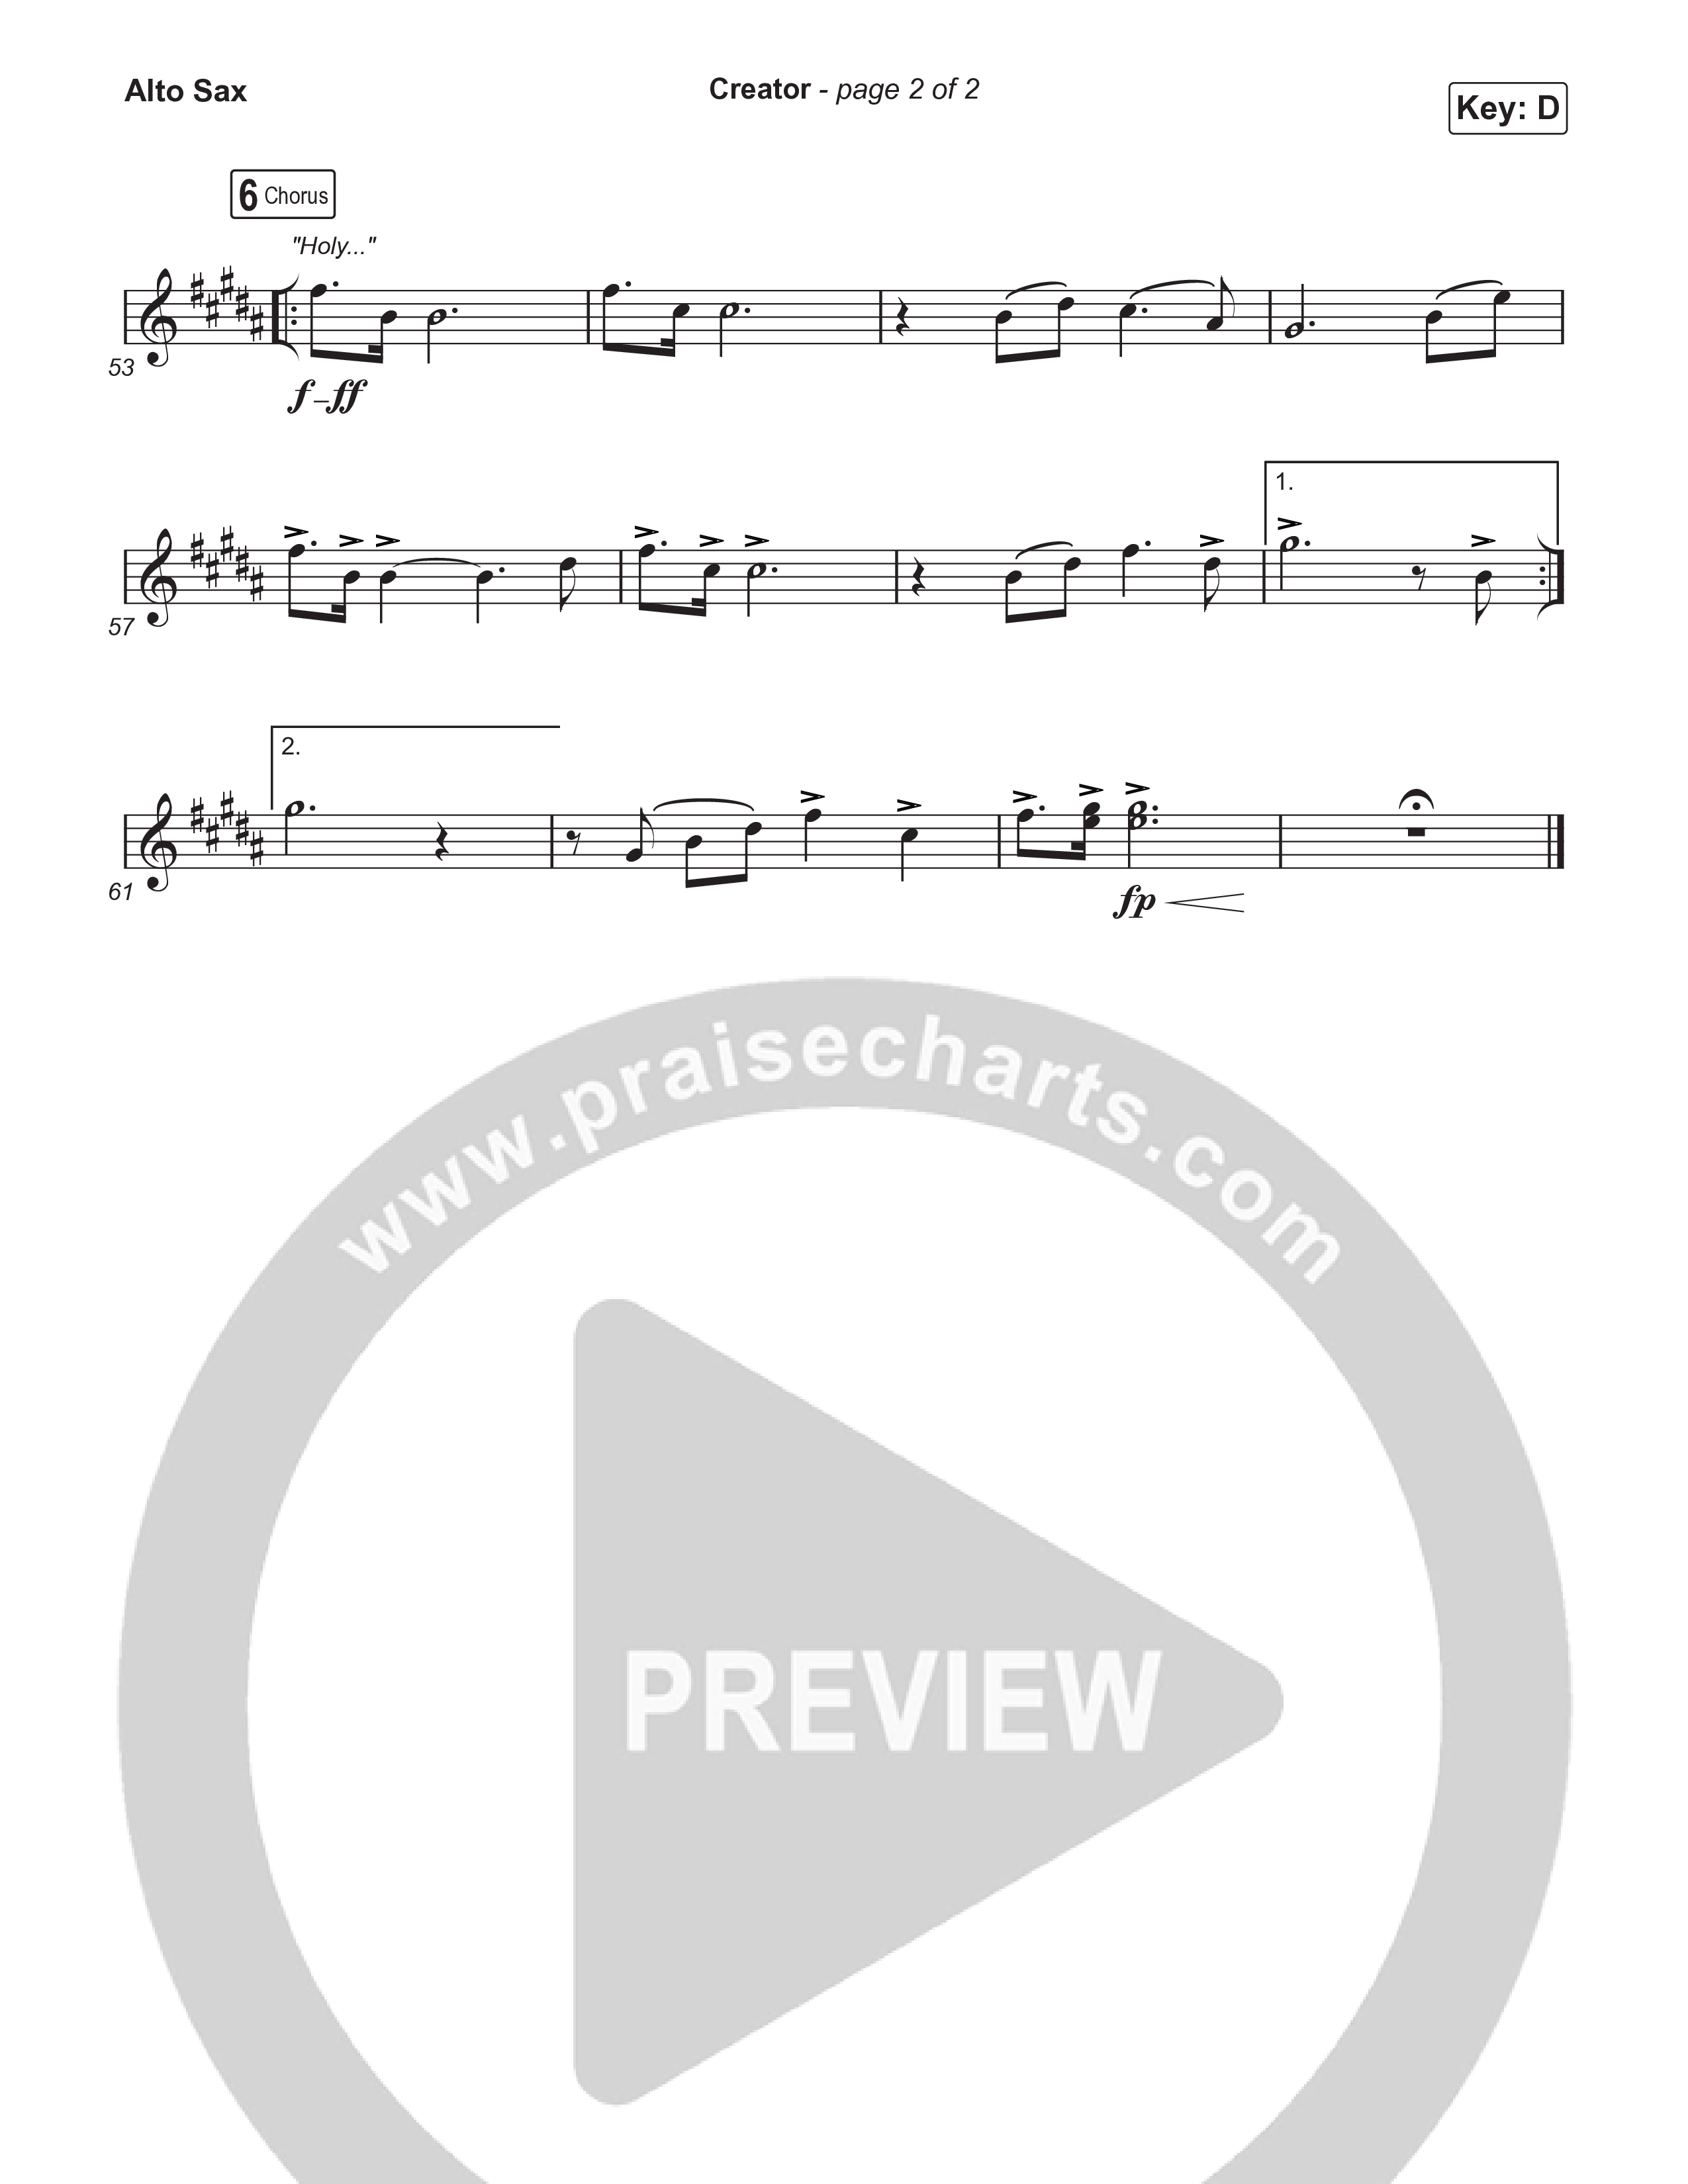 Creator (Choral Anthem SATB) Sax Pack (Phil Wickham / Arr. Mason Brown)